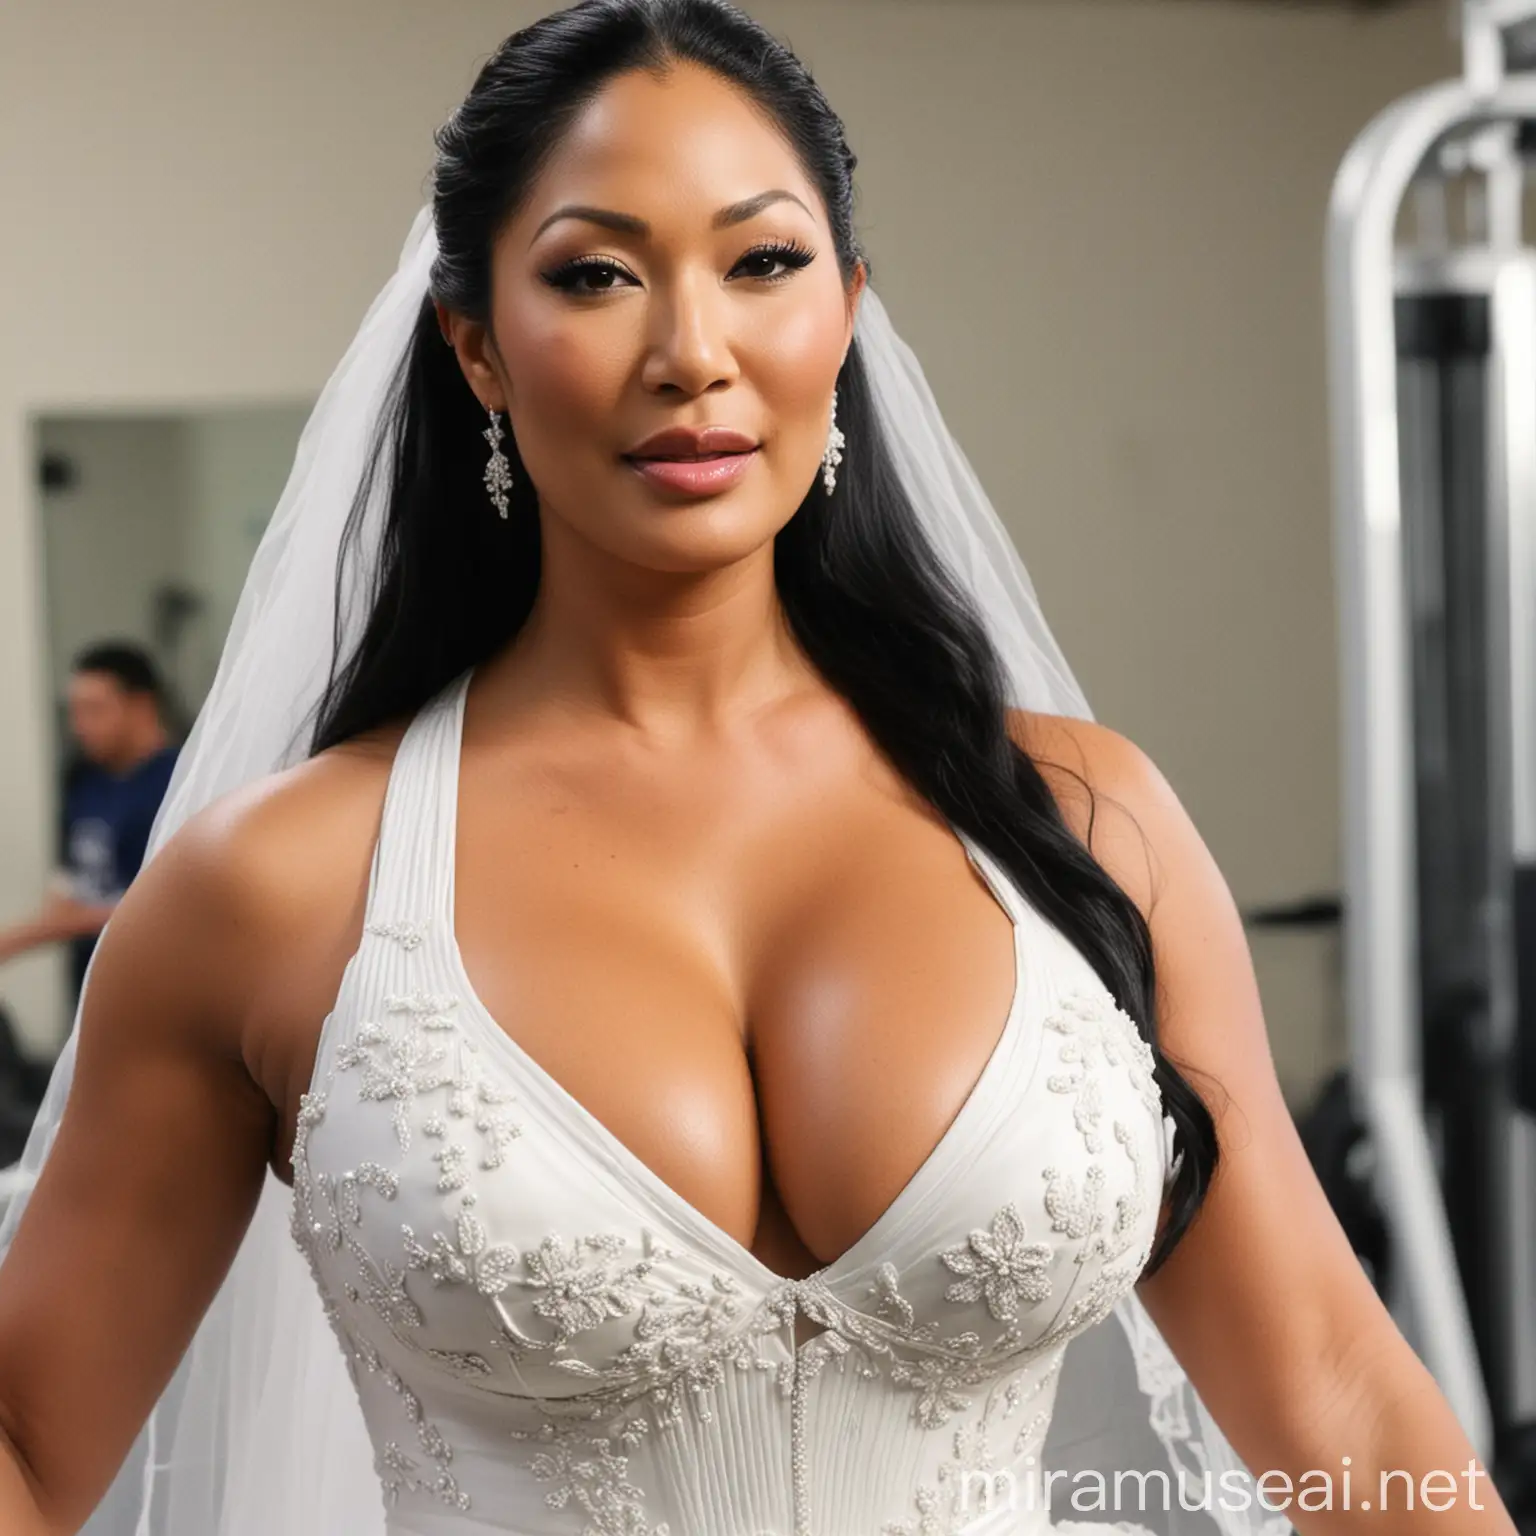 Kimora Lee Simmons Flaunts Curves in Wedding Dress Workout